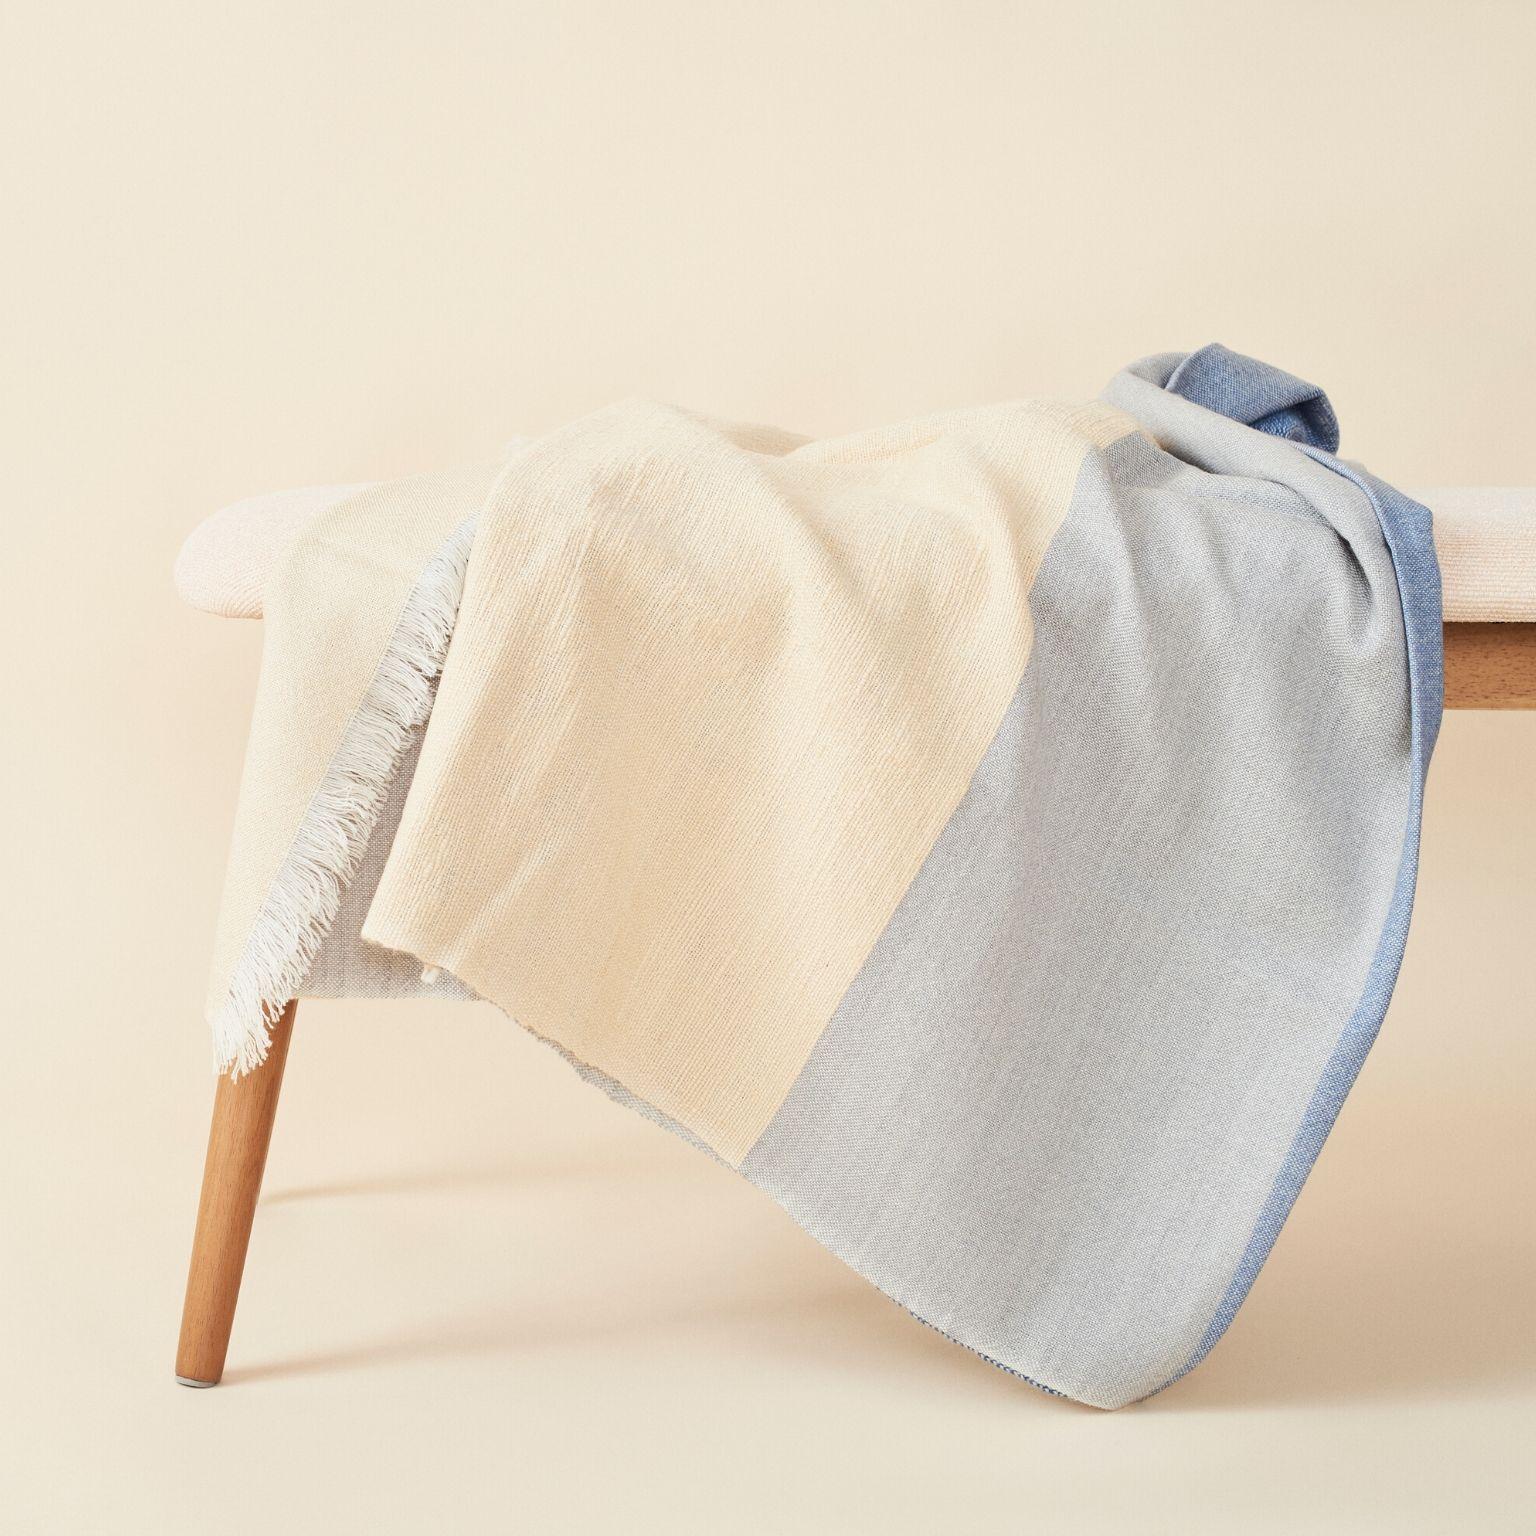 Ceru Handloom Merino Throw / Blanket in Neutral Shades of Cream & Serene Blue In New Condition For Sale In Bloomfield Hills, MI